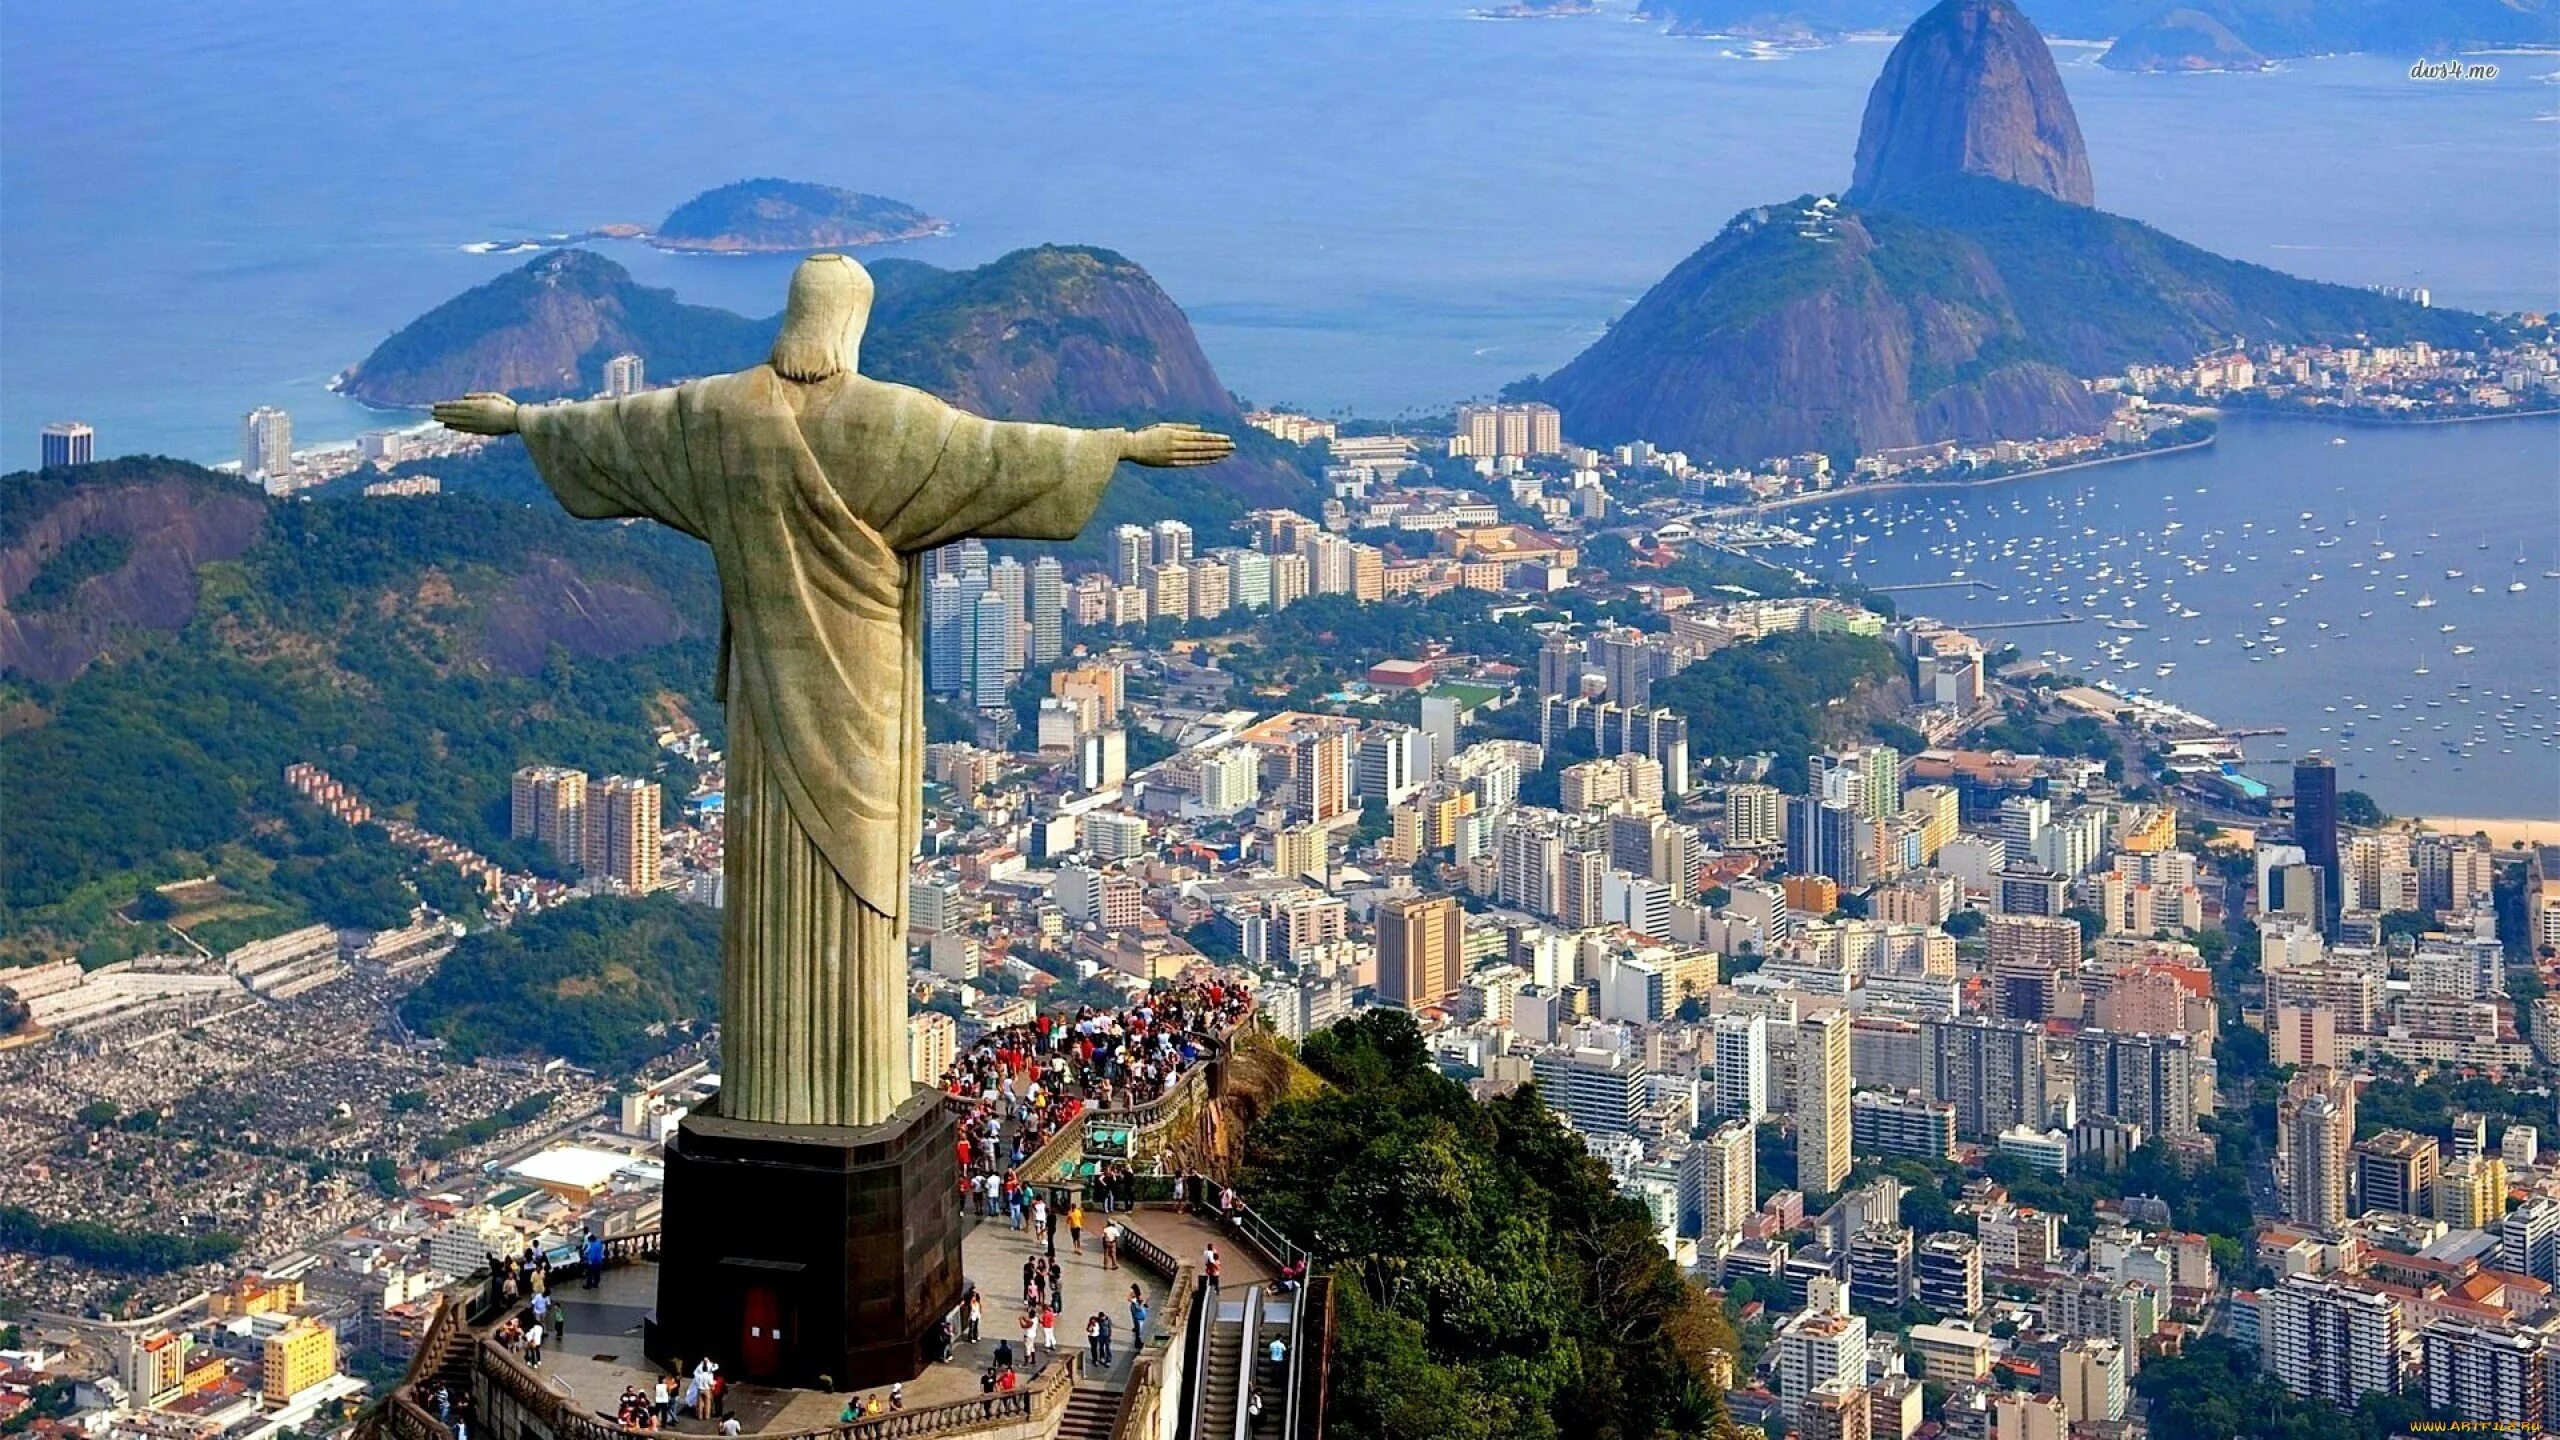 Статуя Христа в Рио-де-Жанейро. Статуя Христа-Искупителя Рио-де-Жанейро. Бразилия Рио де Жанейро. Статуя Христа Искупителя Аргентина. Виды рио де жанейро